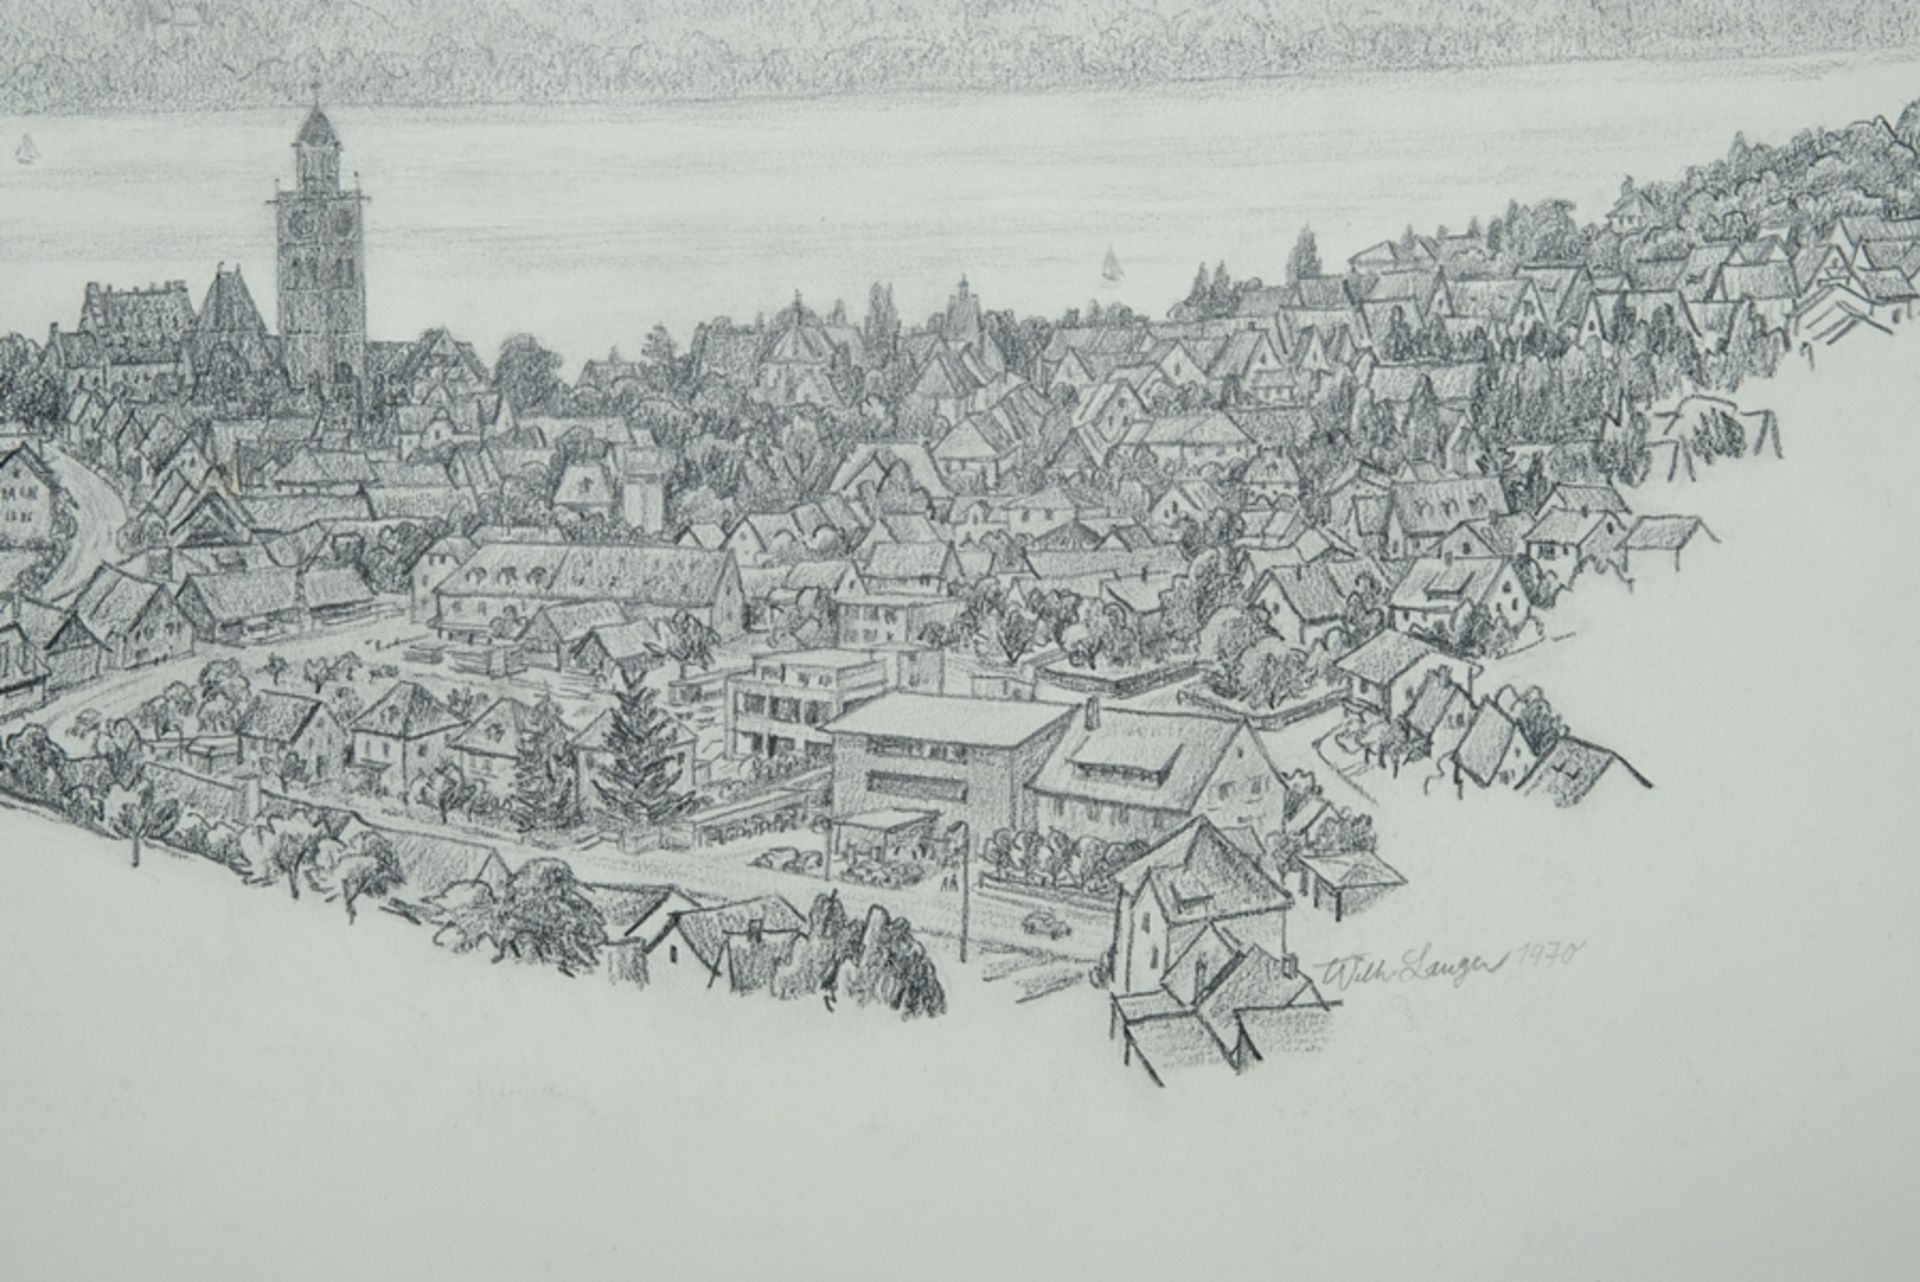 Langer, Wilhelm (20th century) Überlingen and Lake Überlingen, 1970, charcoal and pencil on paper. - Image 2 of 2